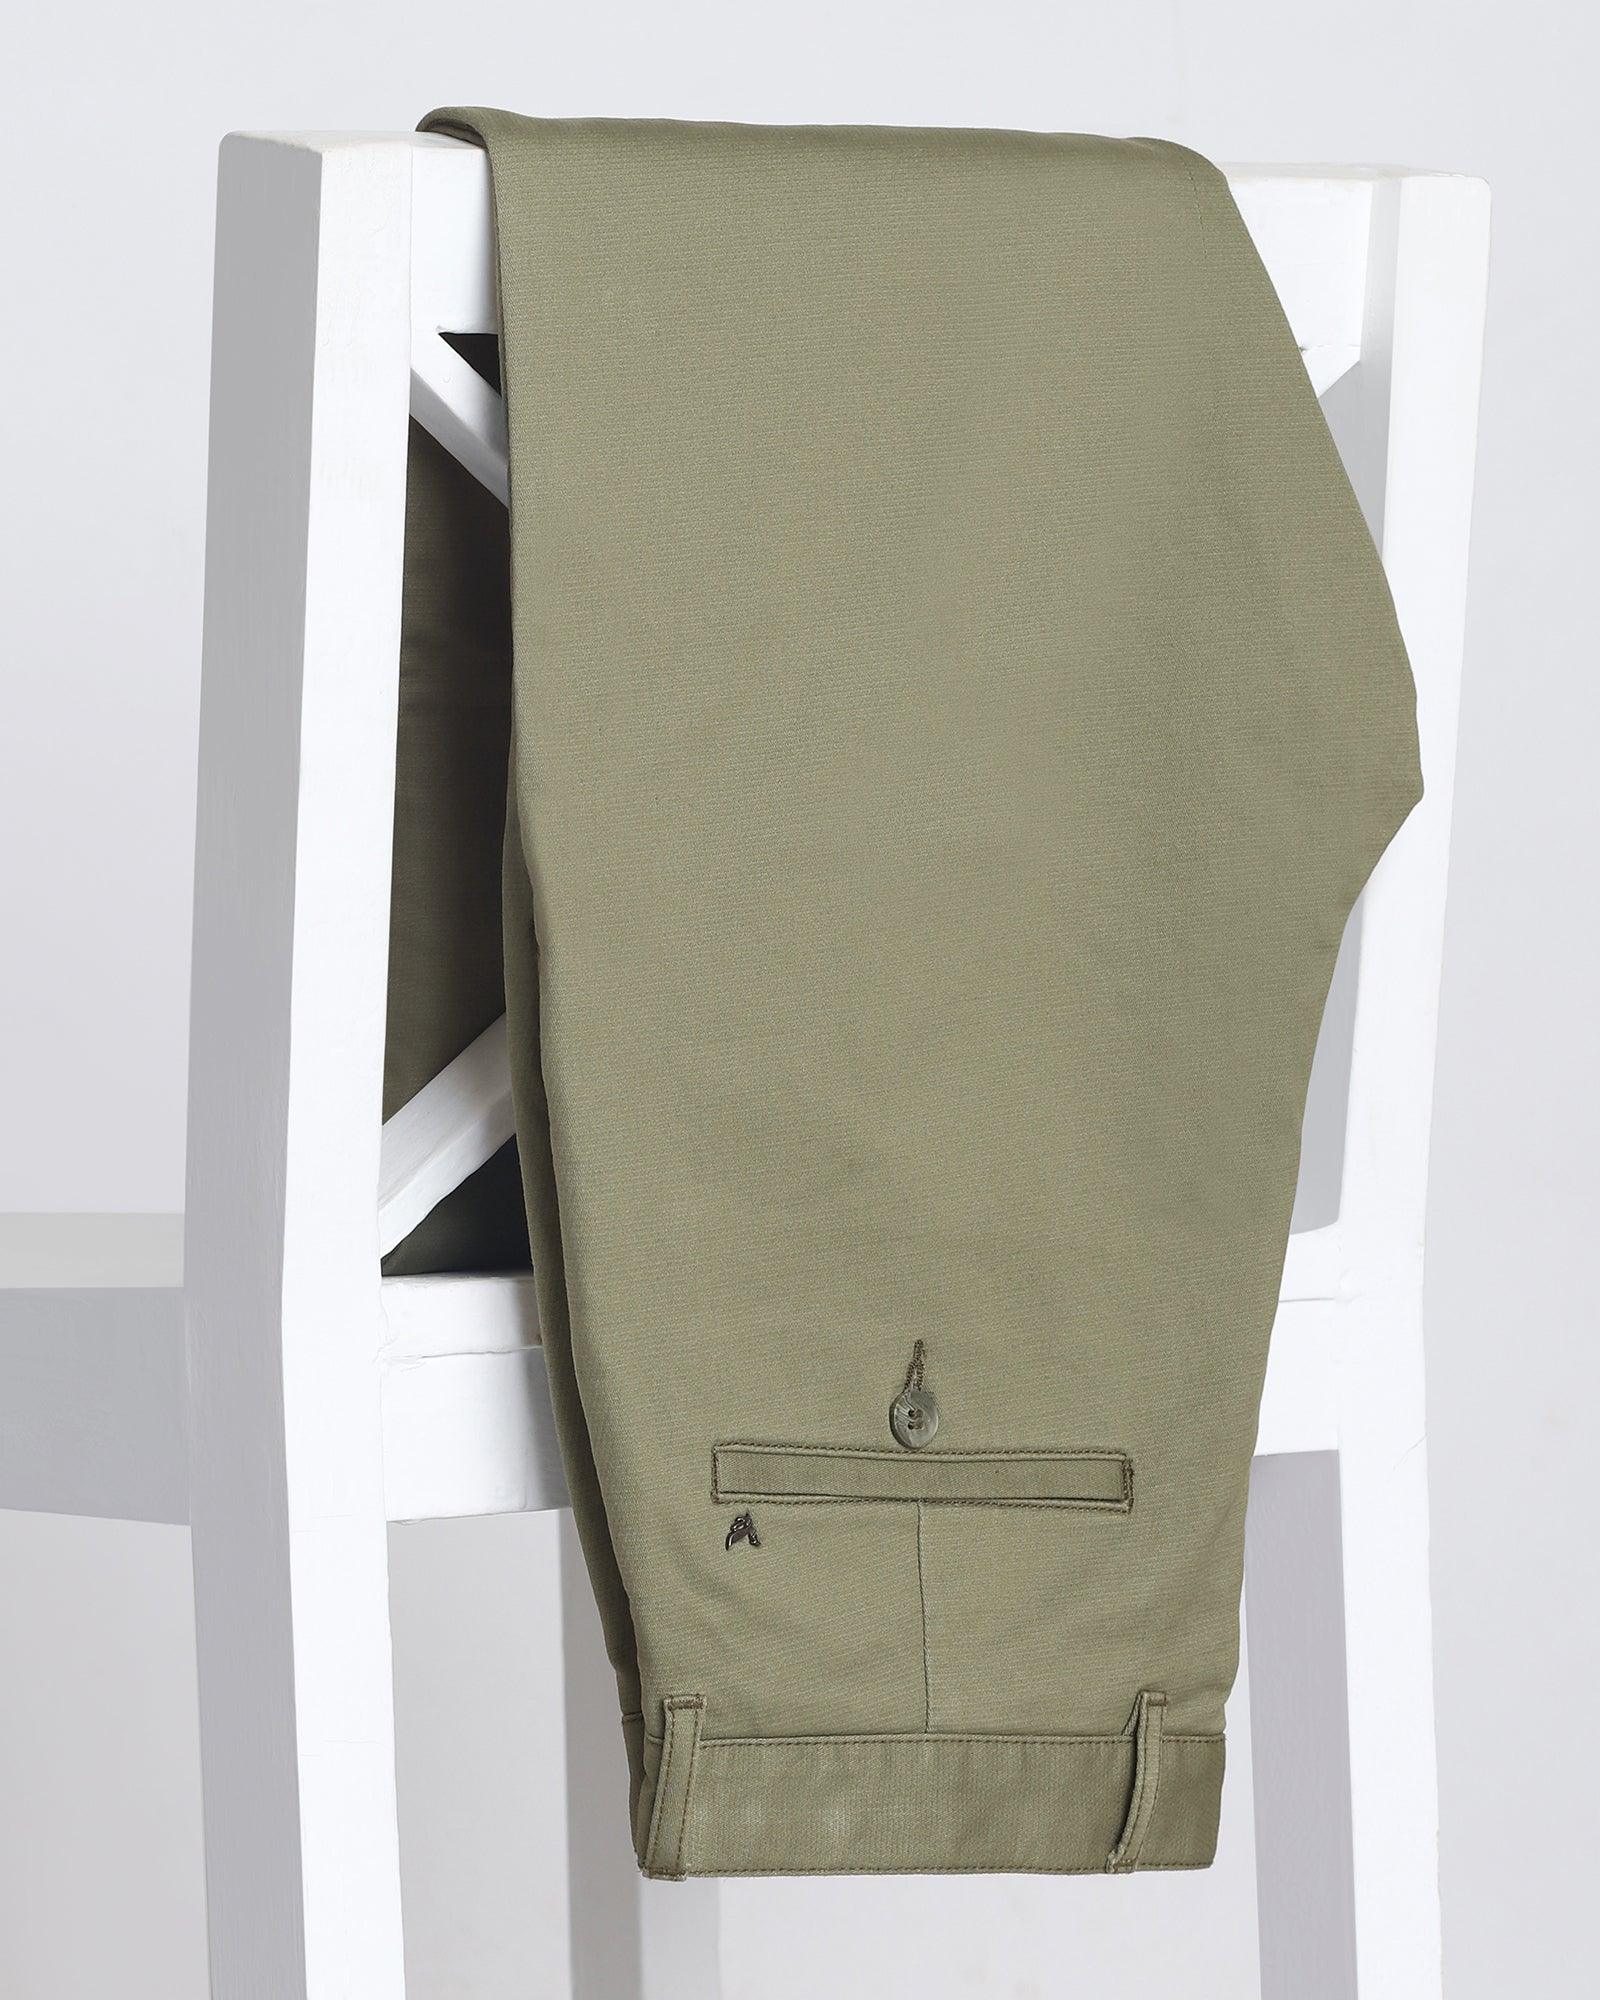 Slim Comfort B-95 Casual Olive Textured Khakis - Segue